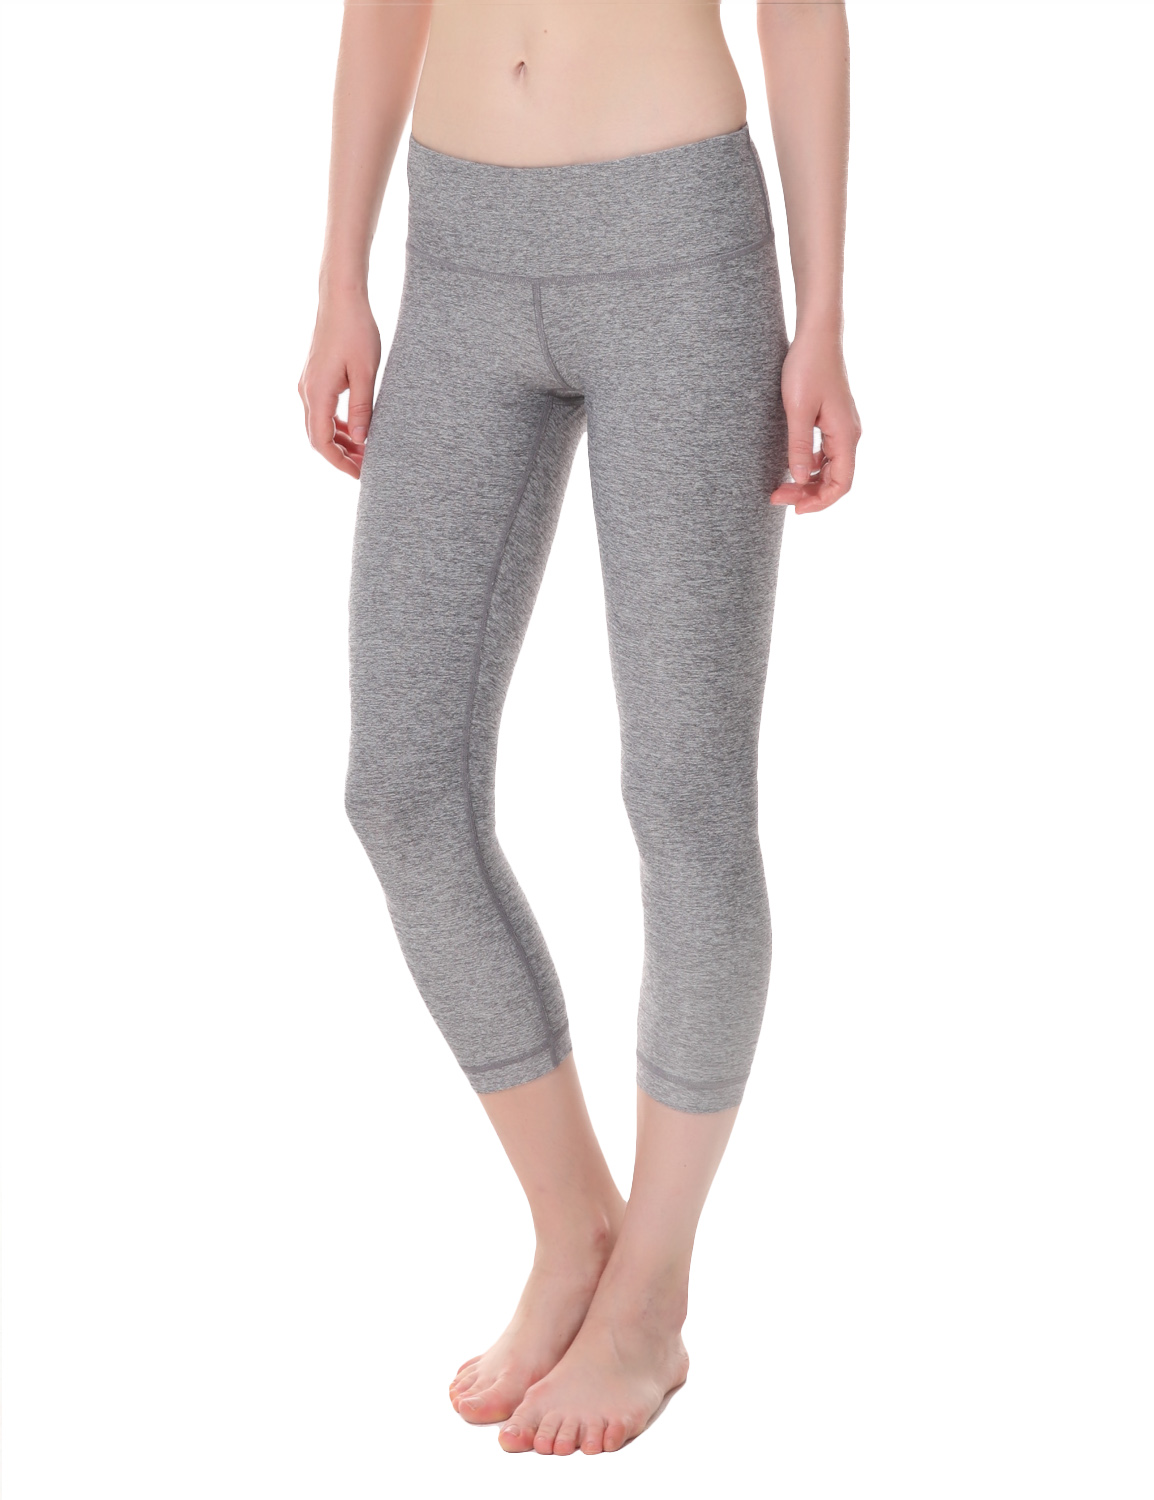 Women's Running Flex Capris Leggings Yoga Pants with Pockets | eBay